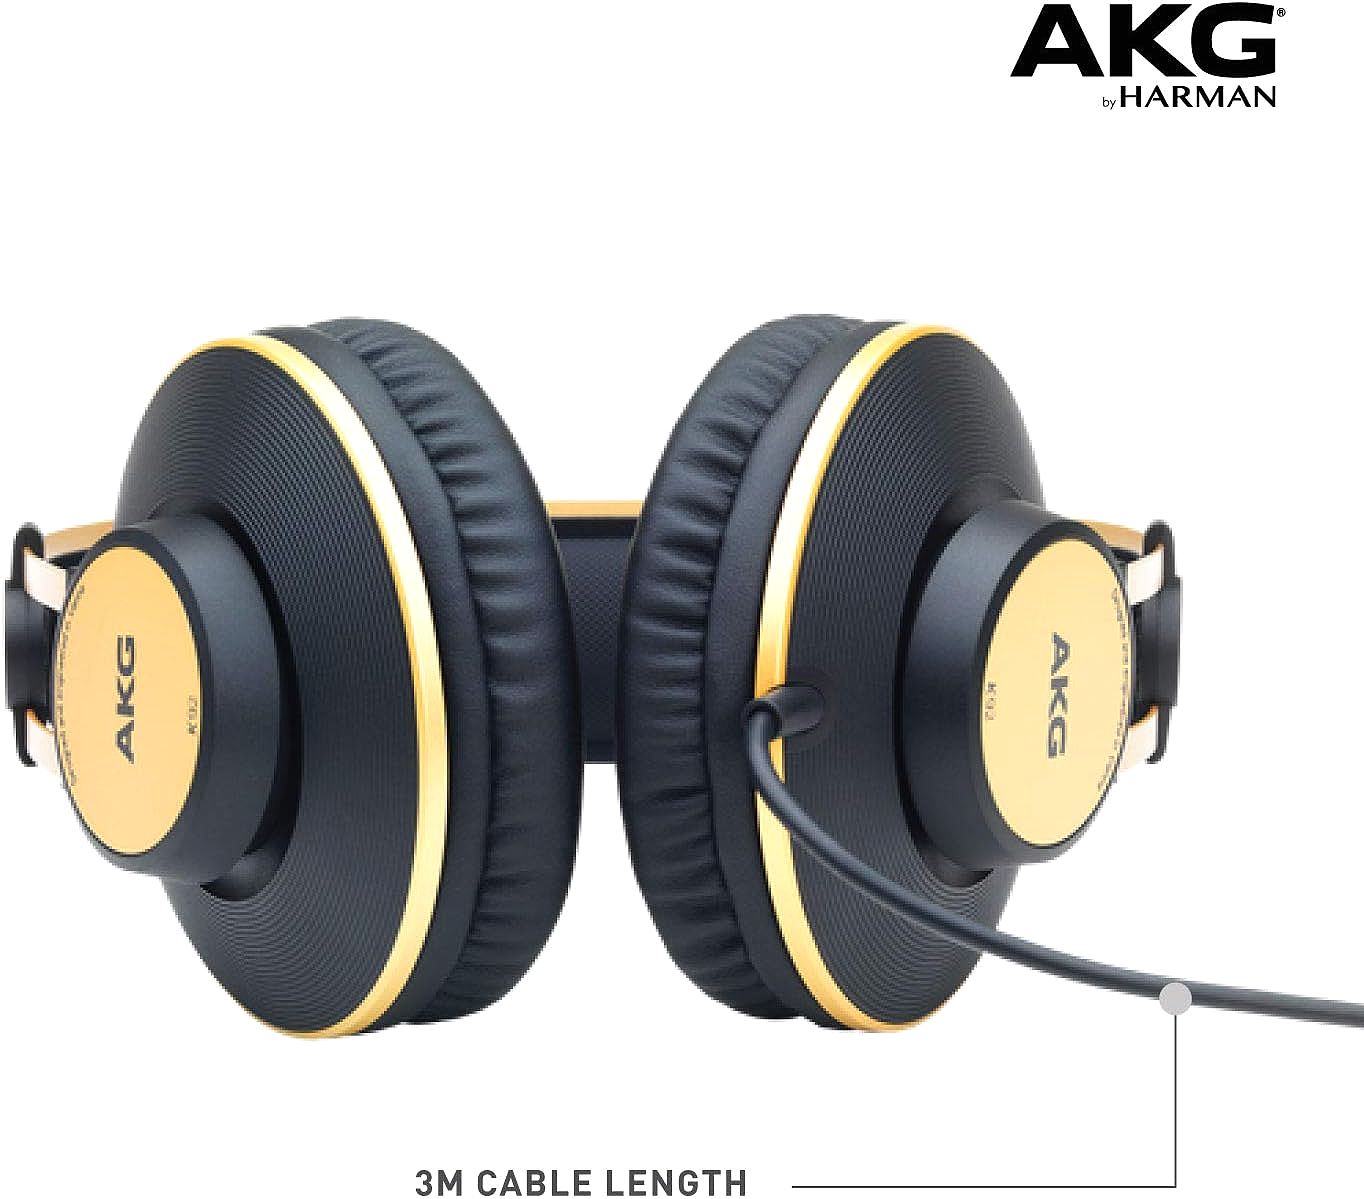   AKG Pro Audio K92 Over-Ear Headphones    